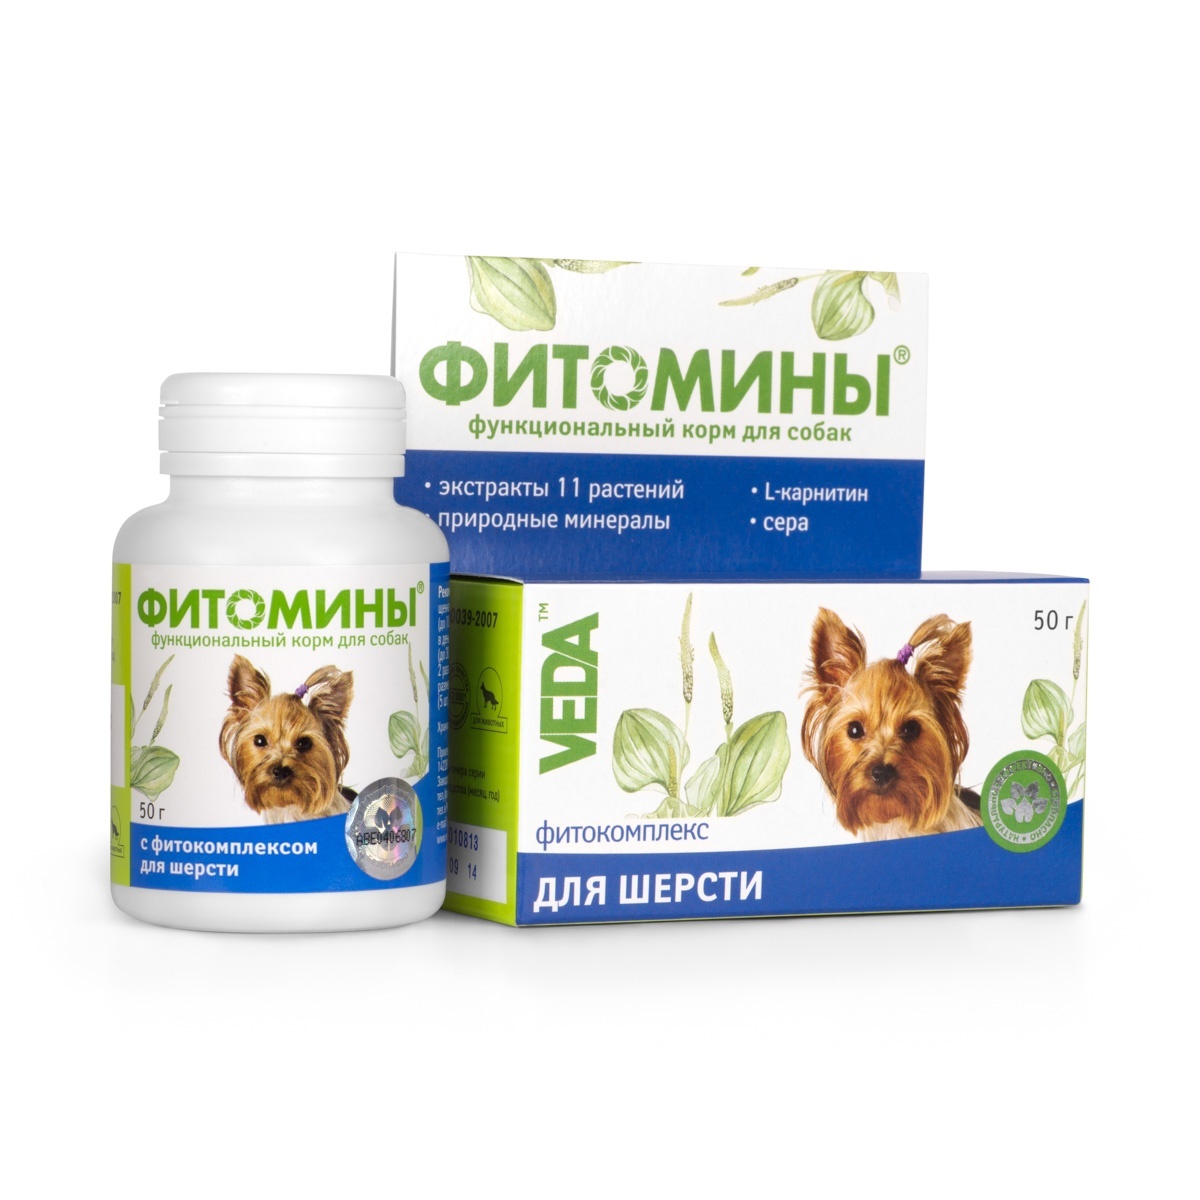 Веда Веда фитомины для шерсти собак, 100 таб. (50 г) функциональный корм для собак веда фитомины для укрепления и восстановления суставов 100таб